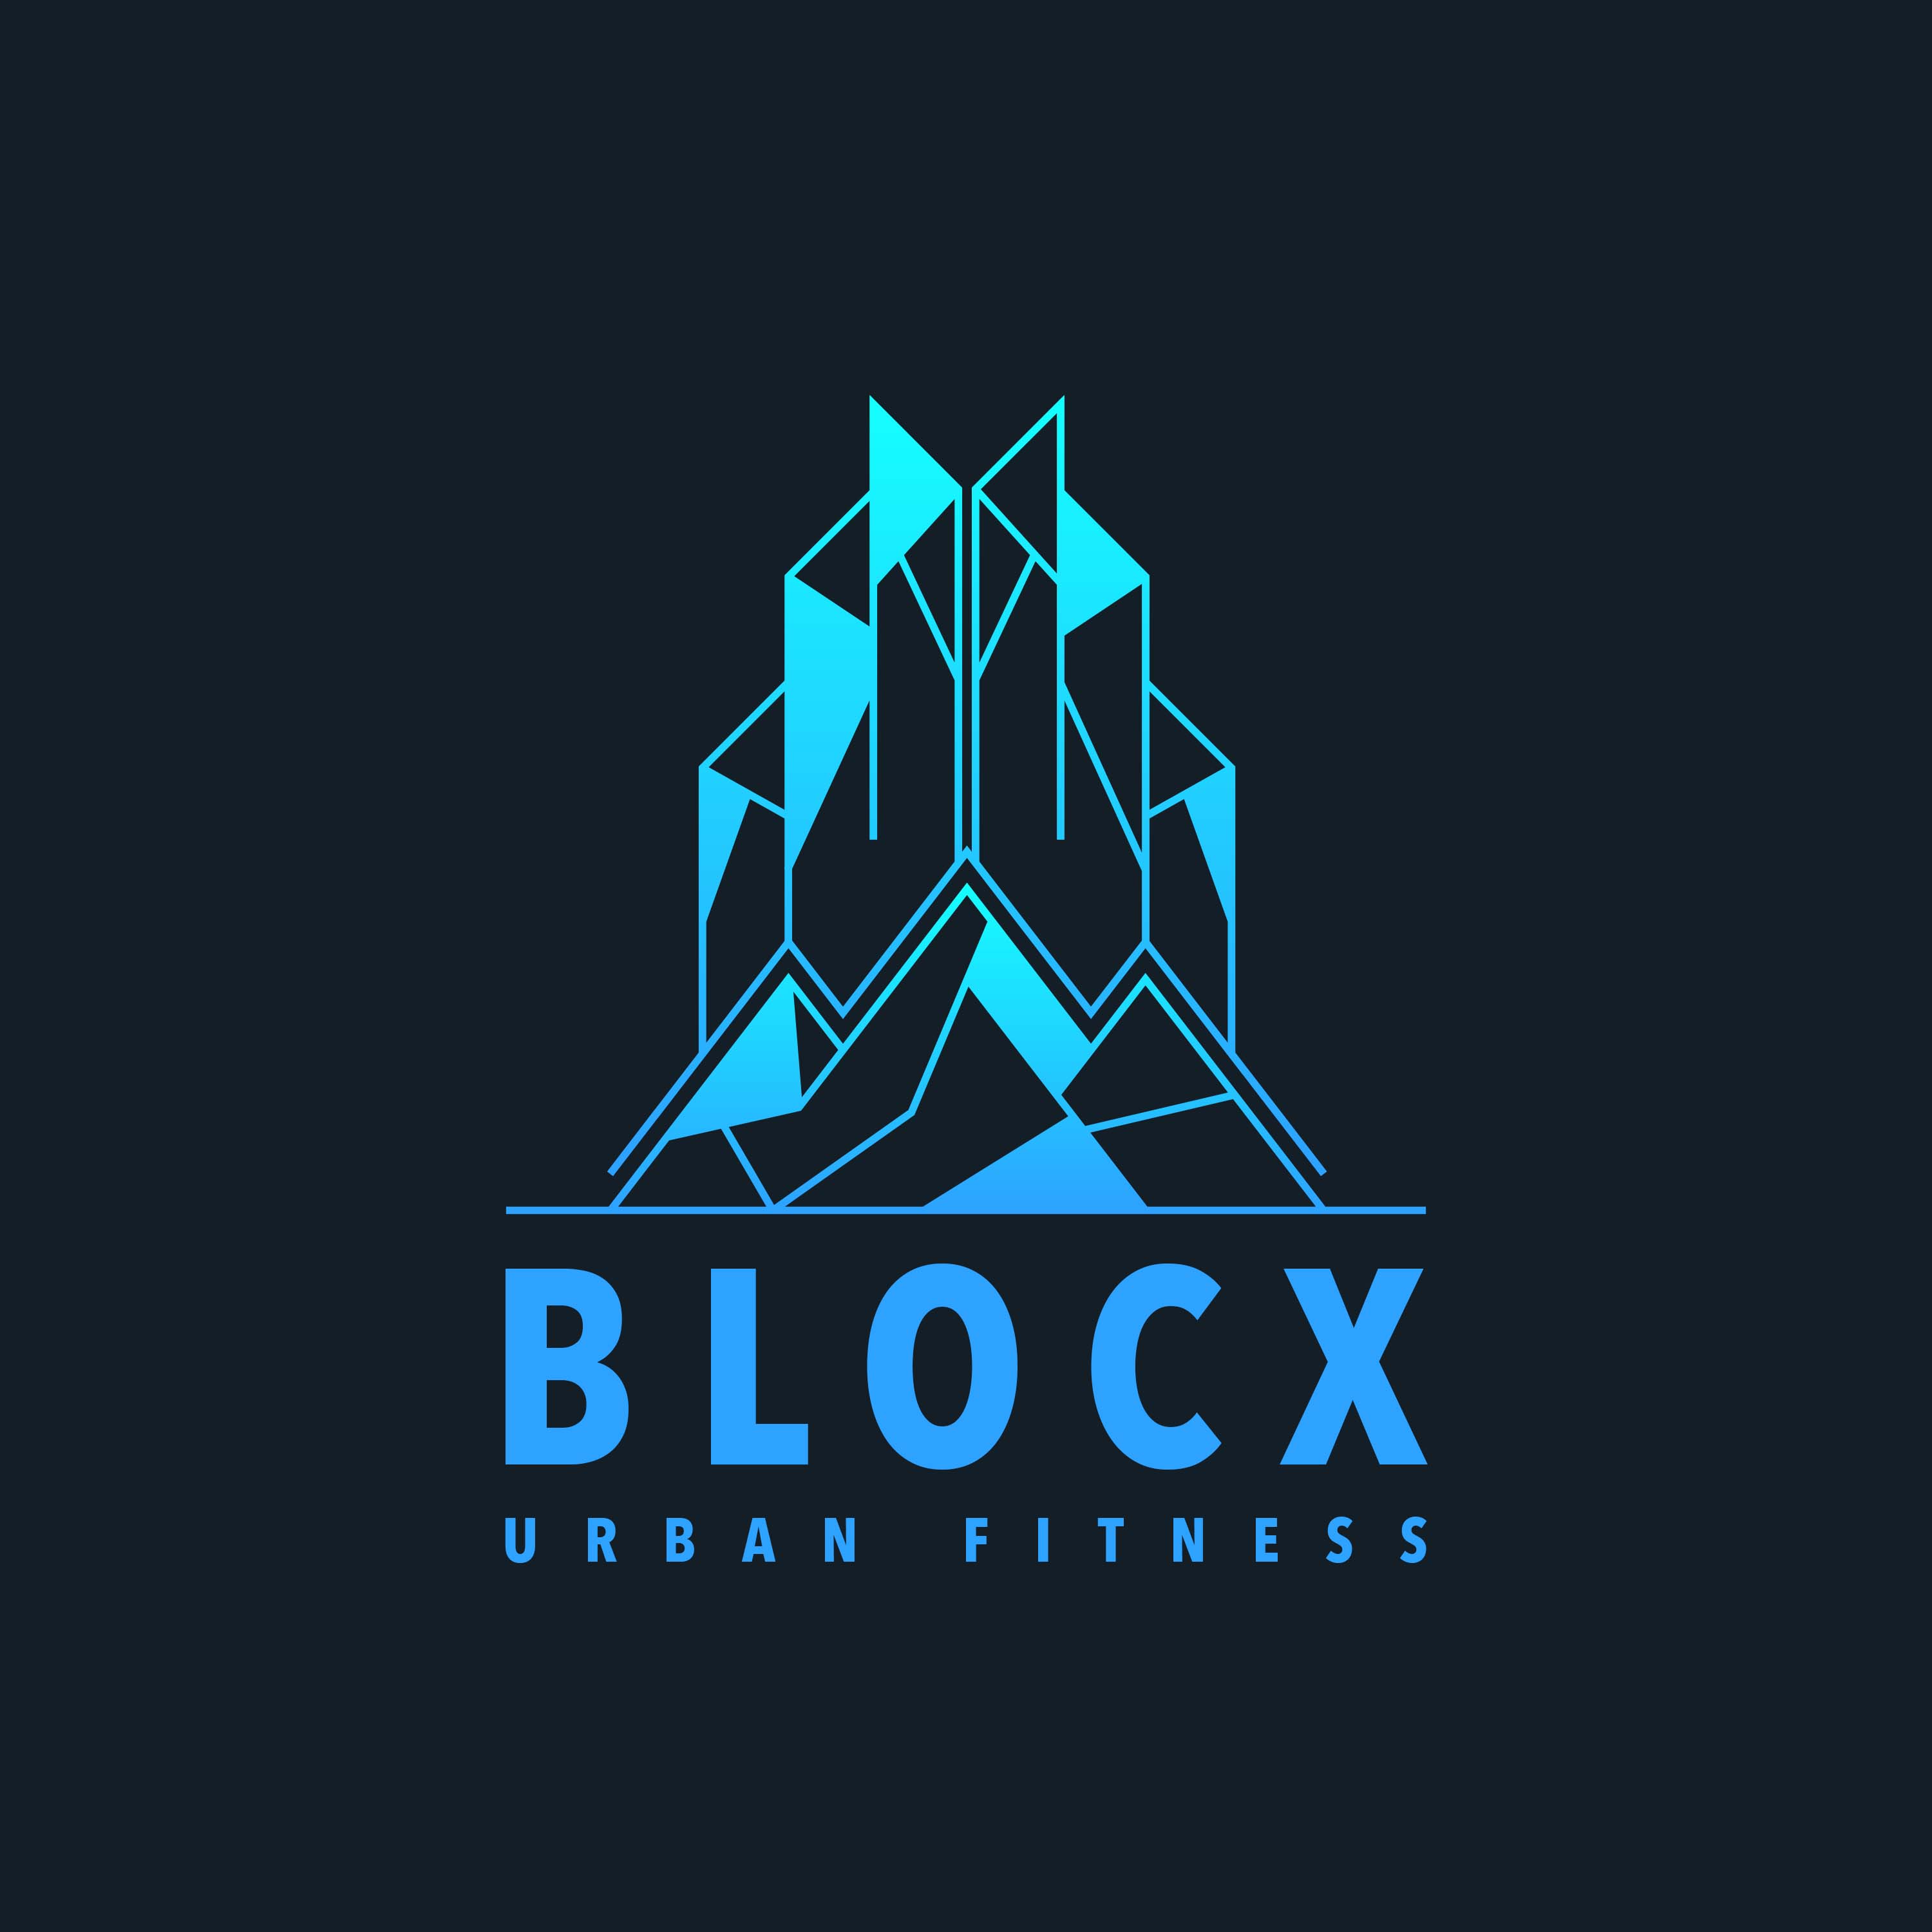 BlocX - Urban Fitness